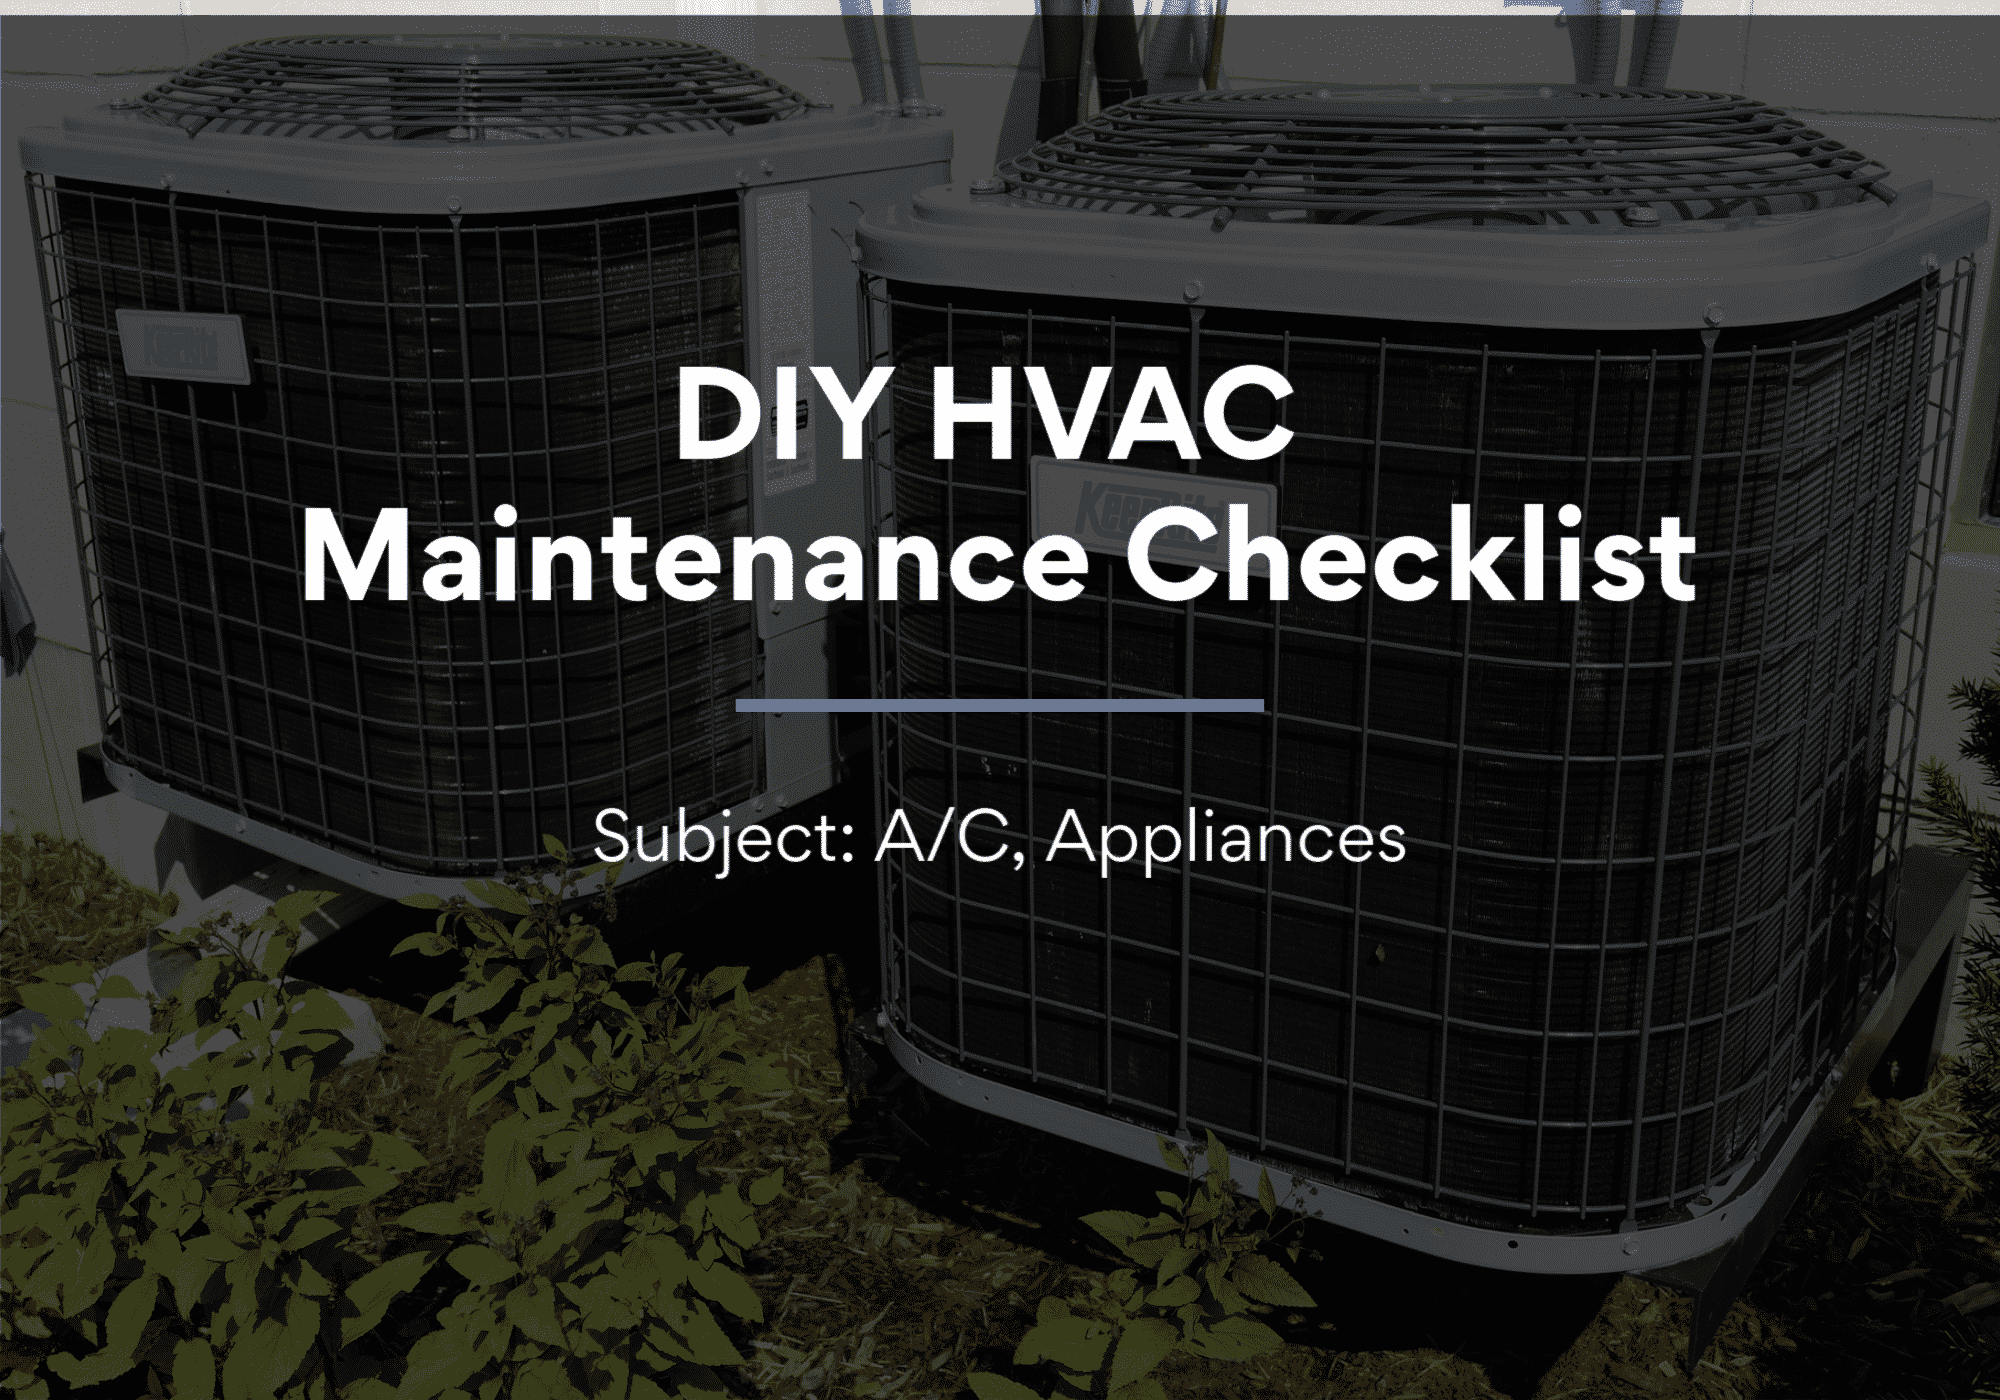 DIY HVAC Maintenance Checklist